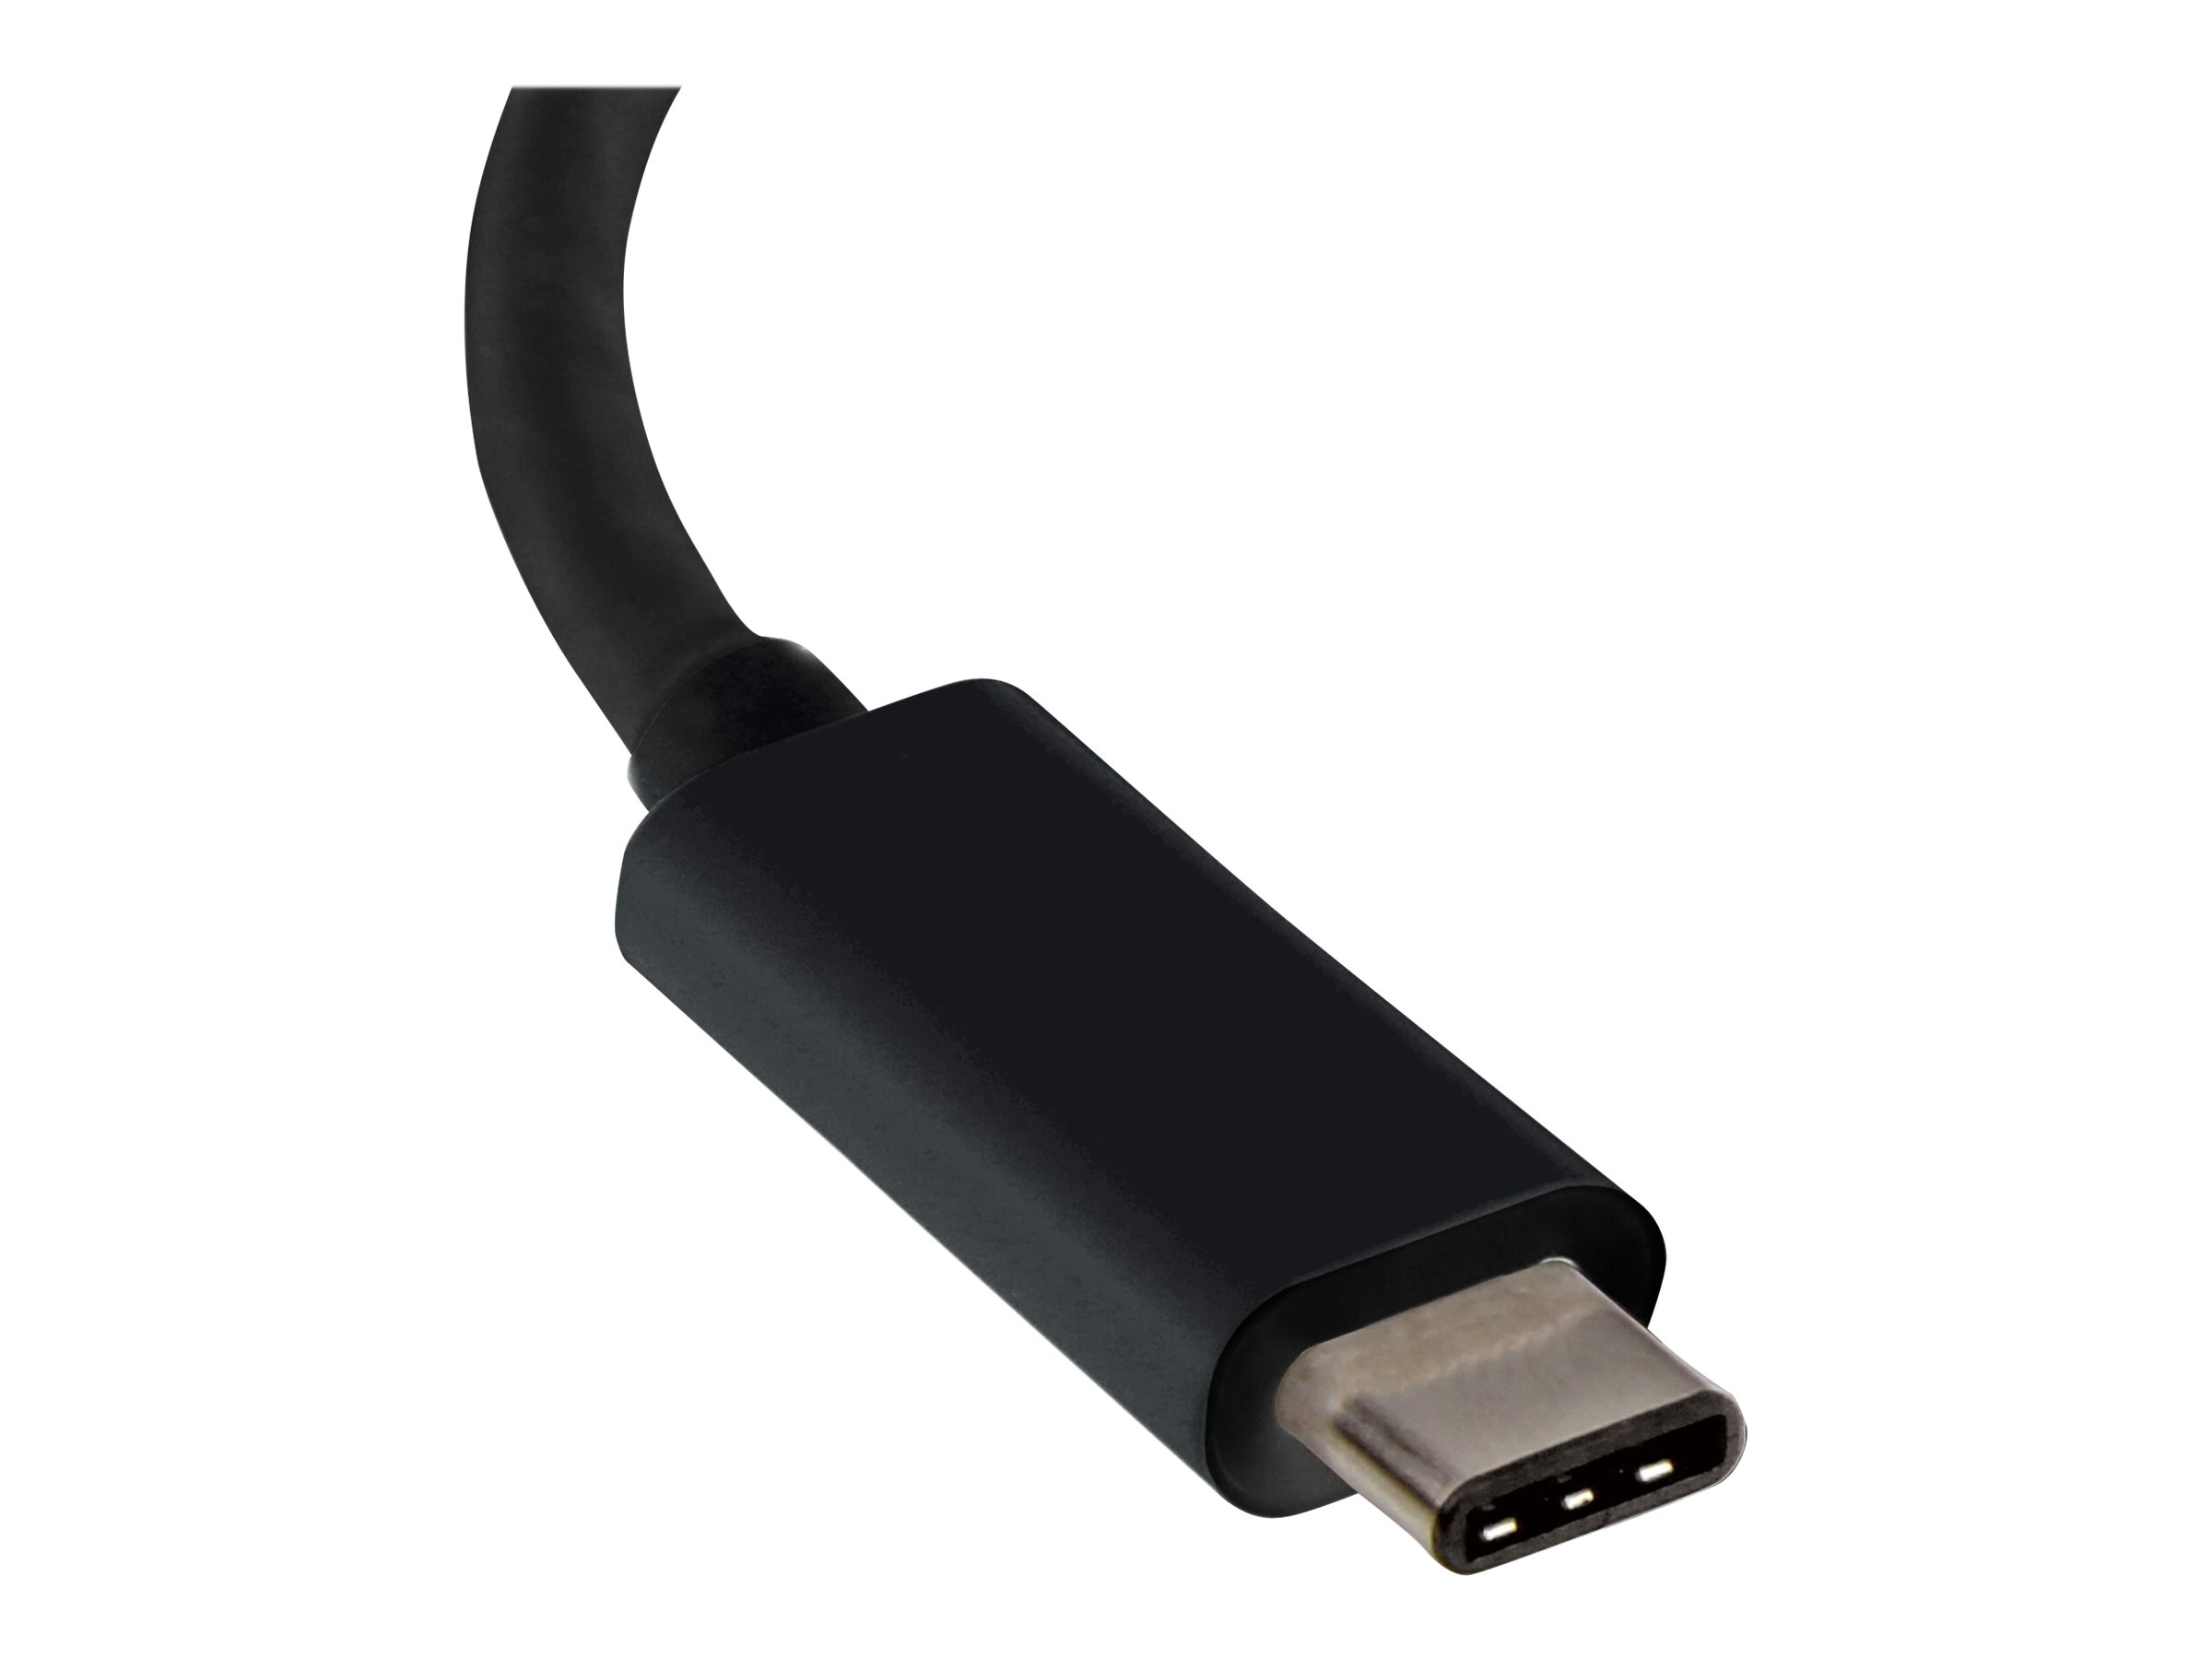 StarTech.com USB-C to VGA Adapter - Black - 1080p - Video Converter For Your MacBook Pro - USB C to VGA Display Dongle (CDP2VGA) - Adaptateur USB / VGA - 24 pin USB-C (M) pour HD-15 (VGA) (F) - USB 3.1 Gen 1 / Thunderbolt 3 - 18 cm - alimentation USB, support 1920 x 1200 (WUXGA) - noir - pour P/N: BNDTB10GI, BNDTB210GSFP, BNDTB410GSFP, BNDTB4M2E1, BNDTBUSB3142, TB4CDOCK - CDP2VGA - Câbles USB